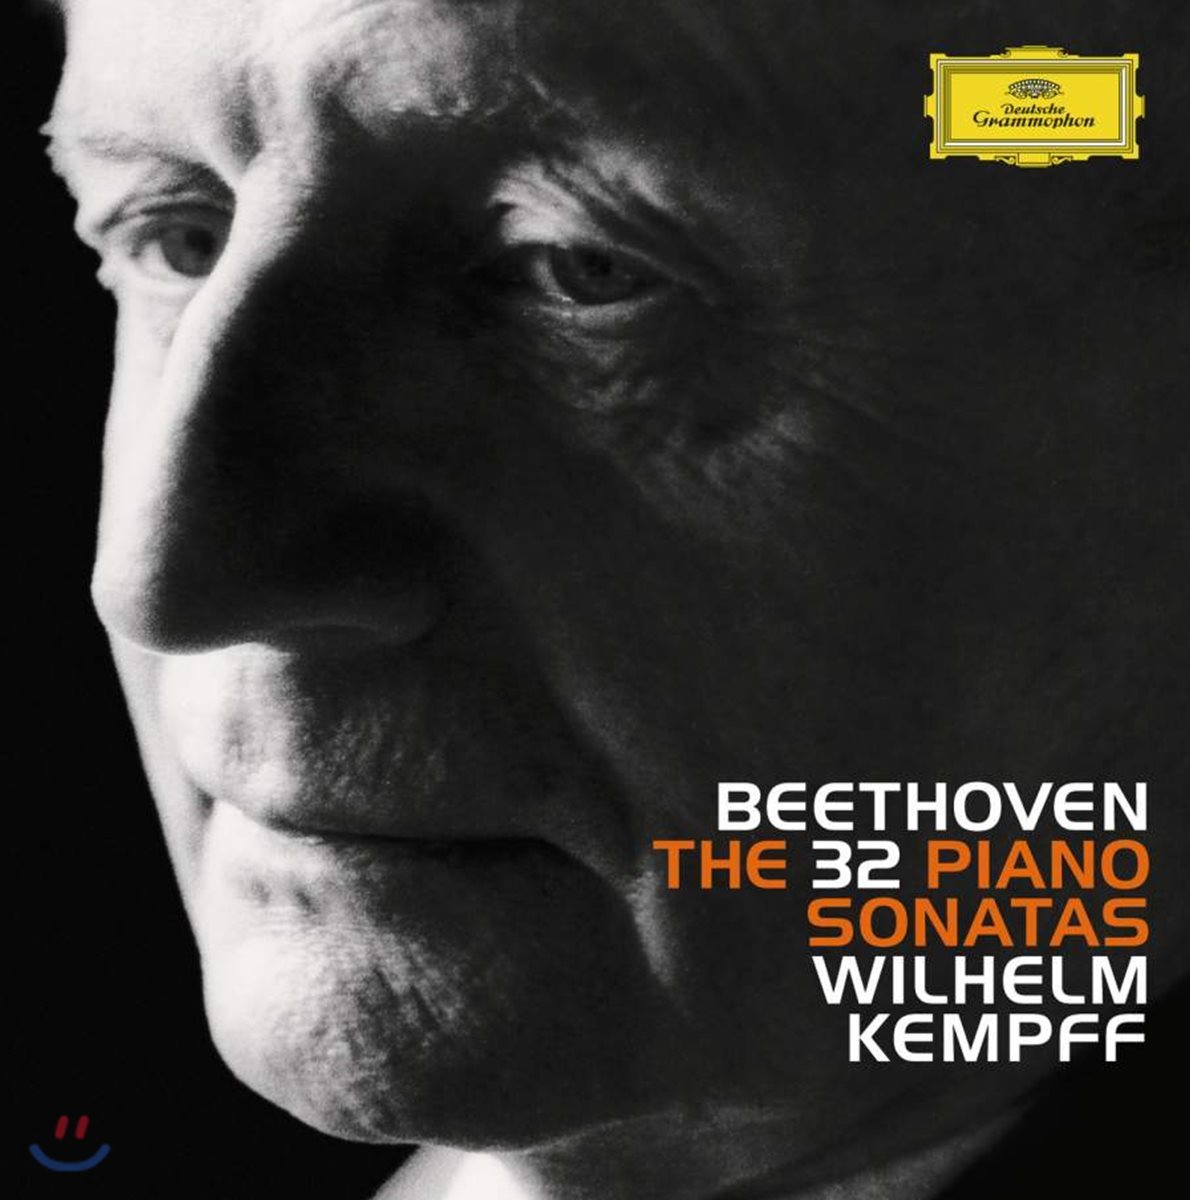 Wilhelm Kempff 베토벤: 피아노 소나타 전곡 - 빌헬름 켐프 (Beethoven : The 32 Piano Sonatas) 